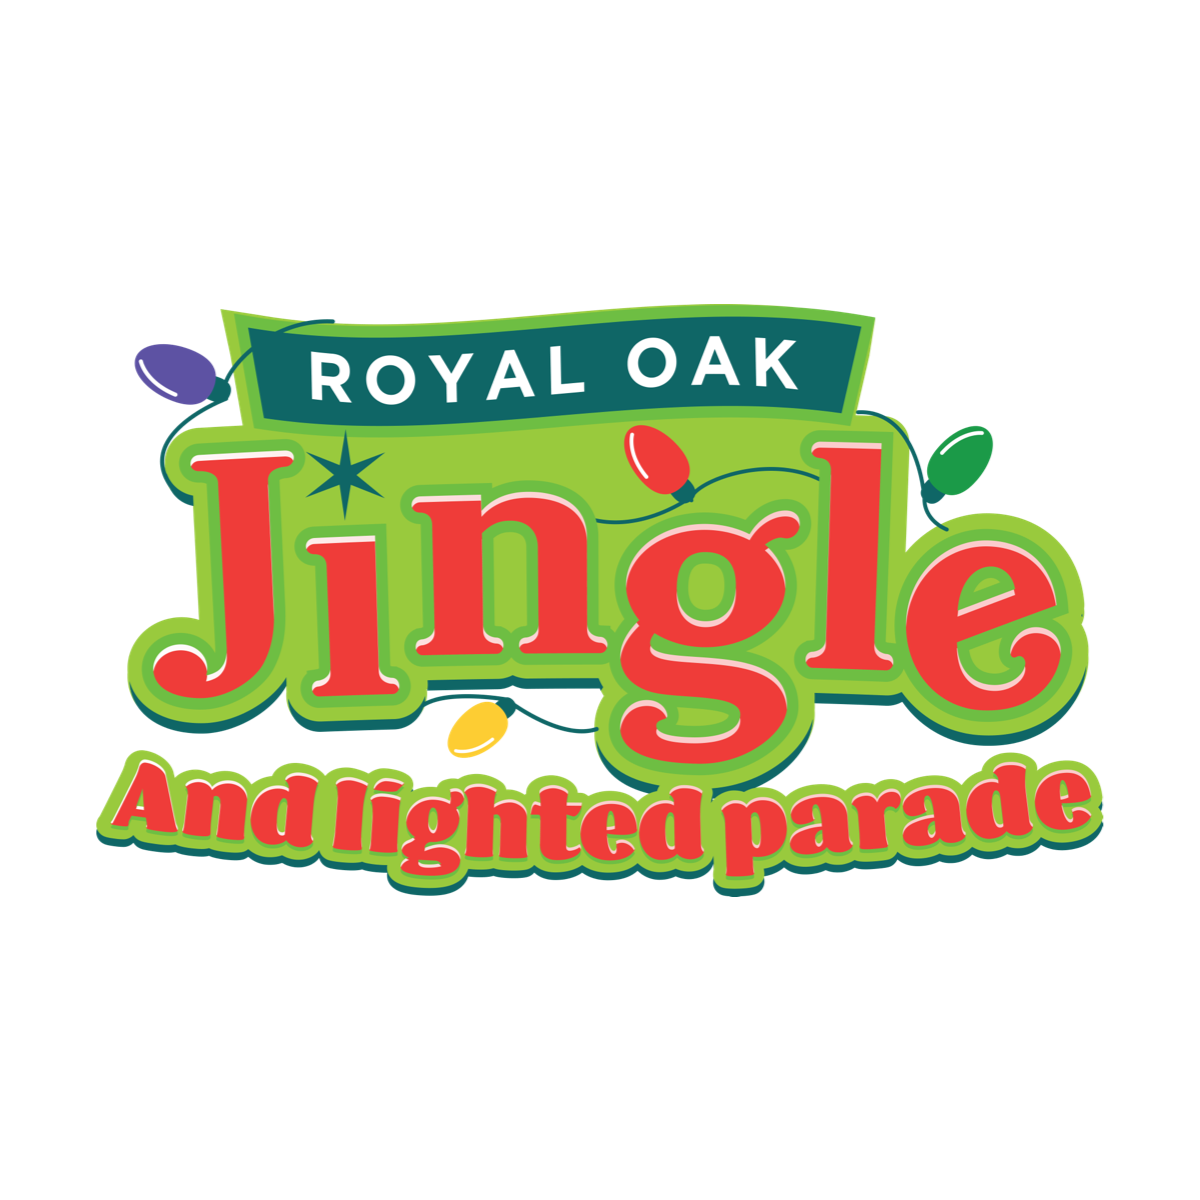 Royal Oak Jingle and Lighted Parade